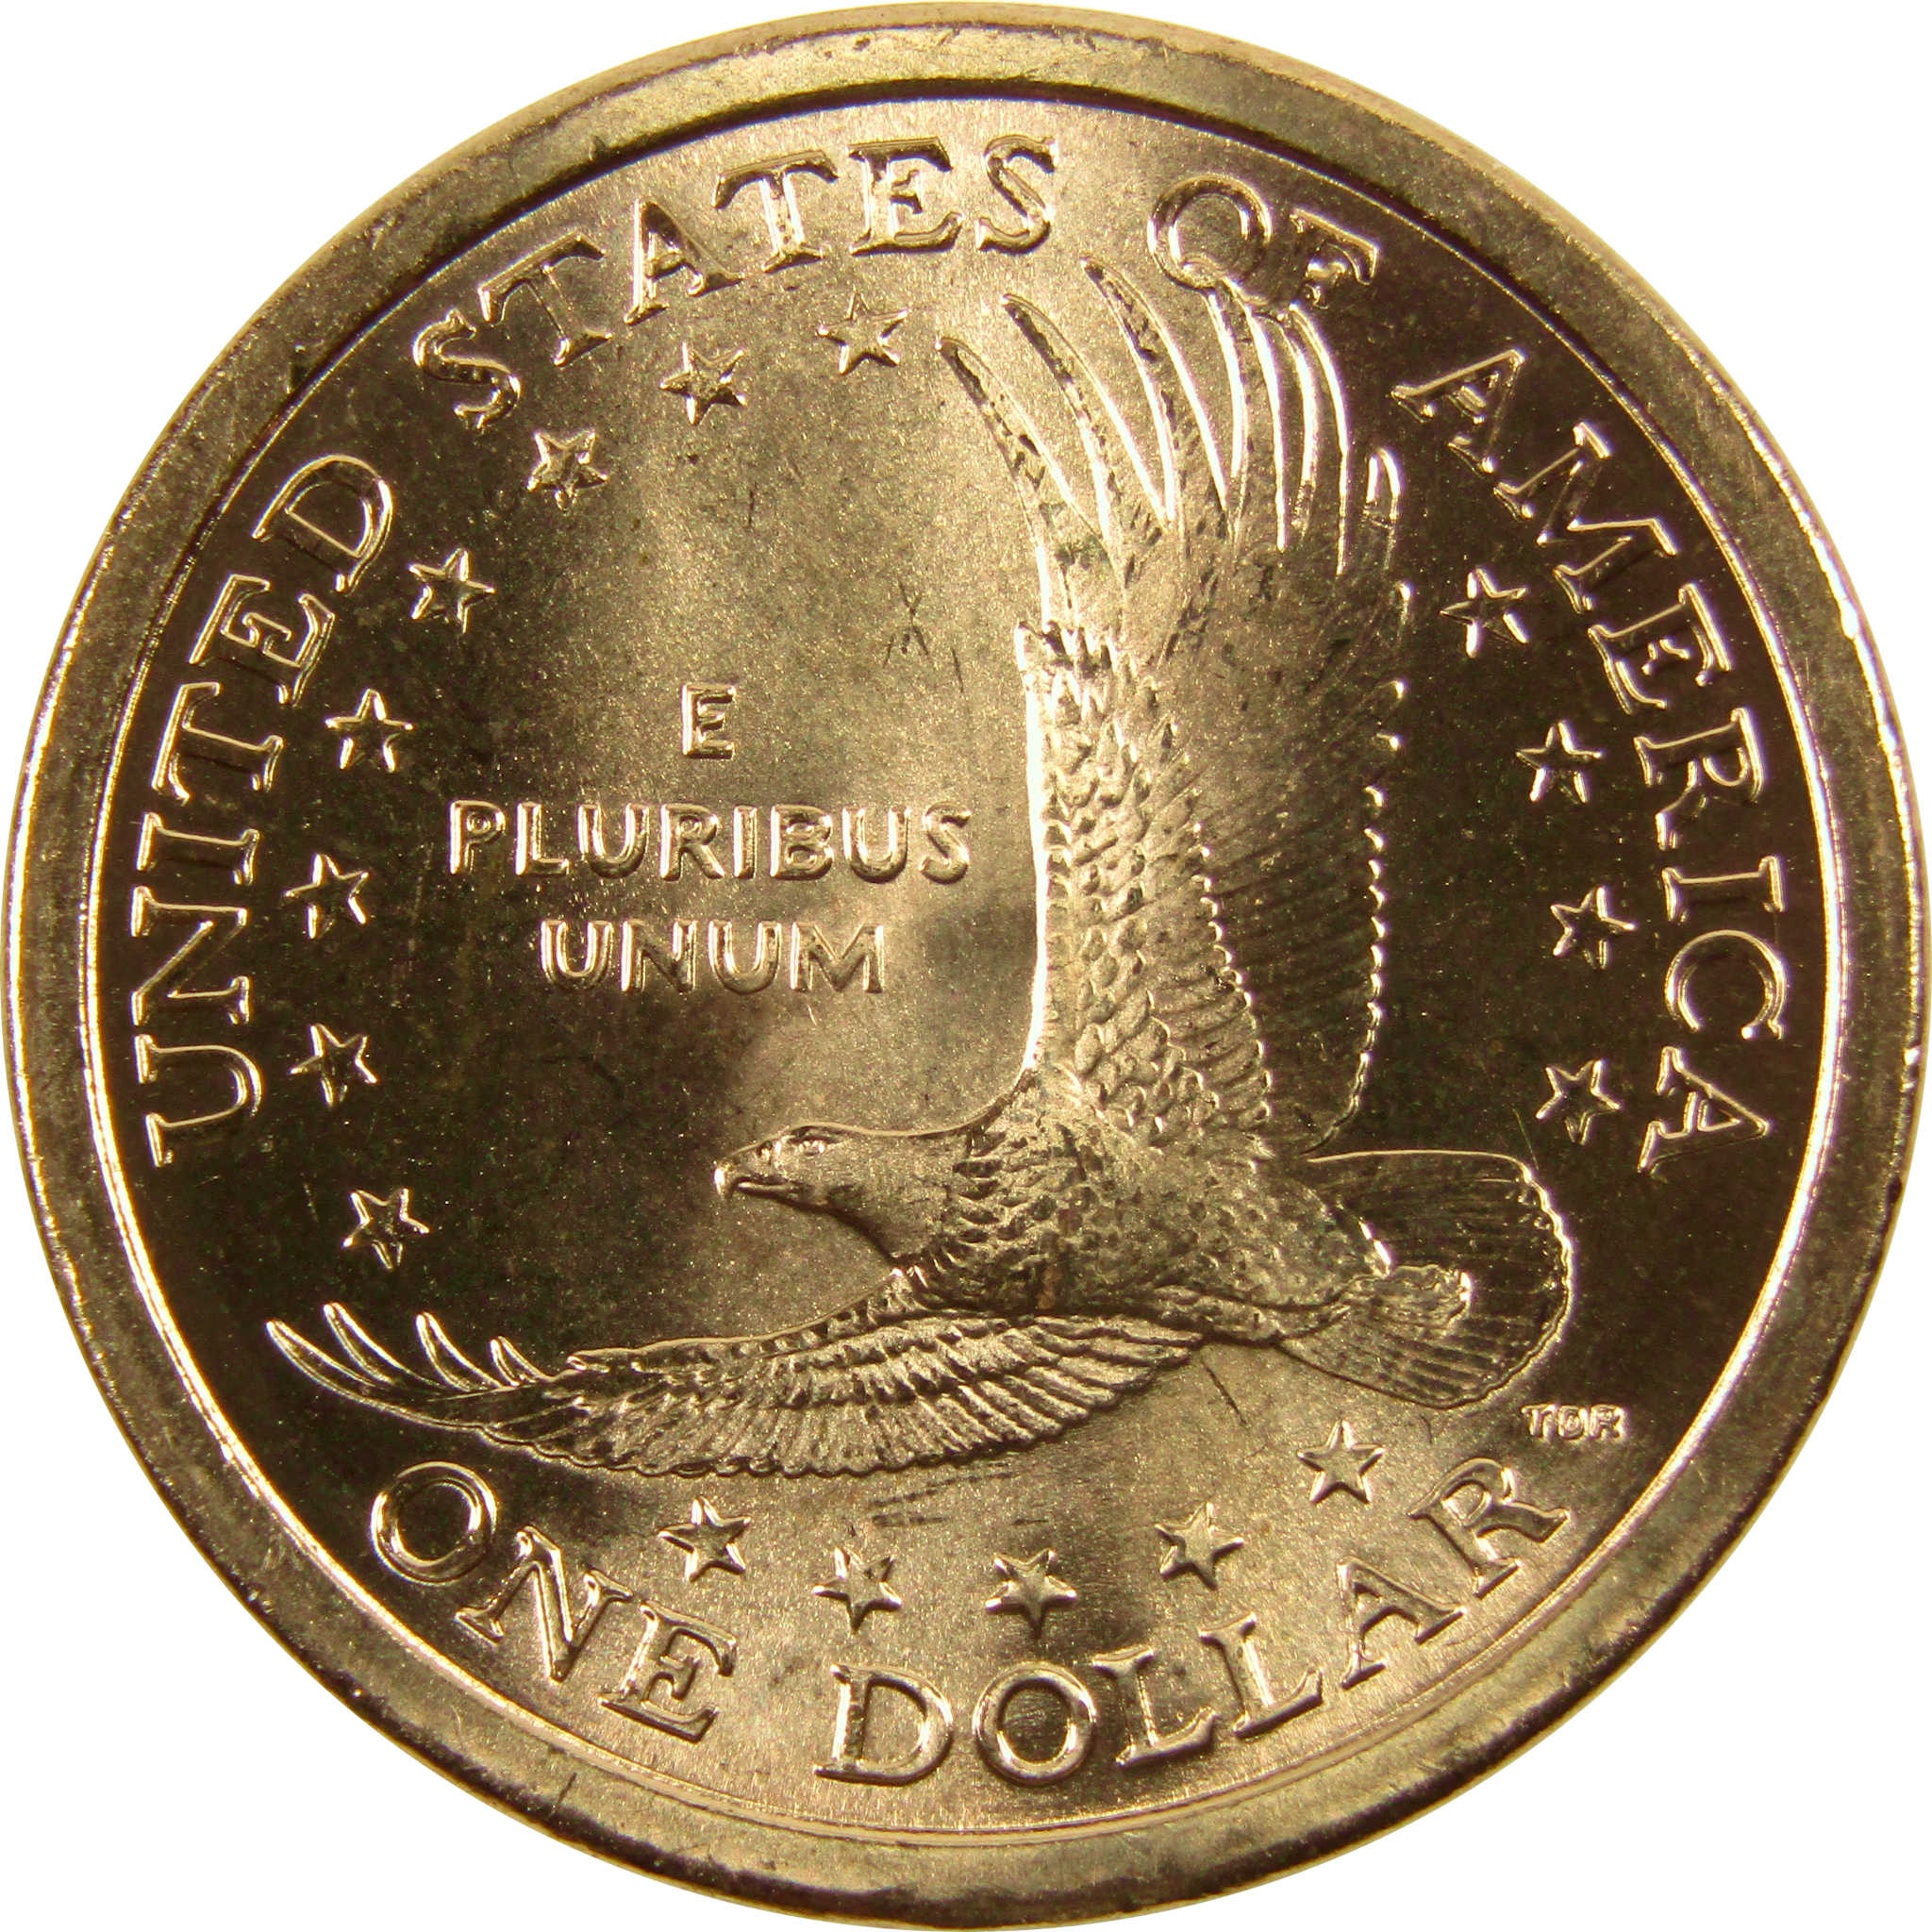 2001 D Sacagawea Native American Dollar BU Uncirculated $1 Coin